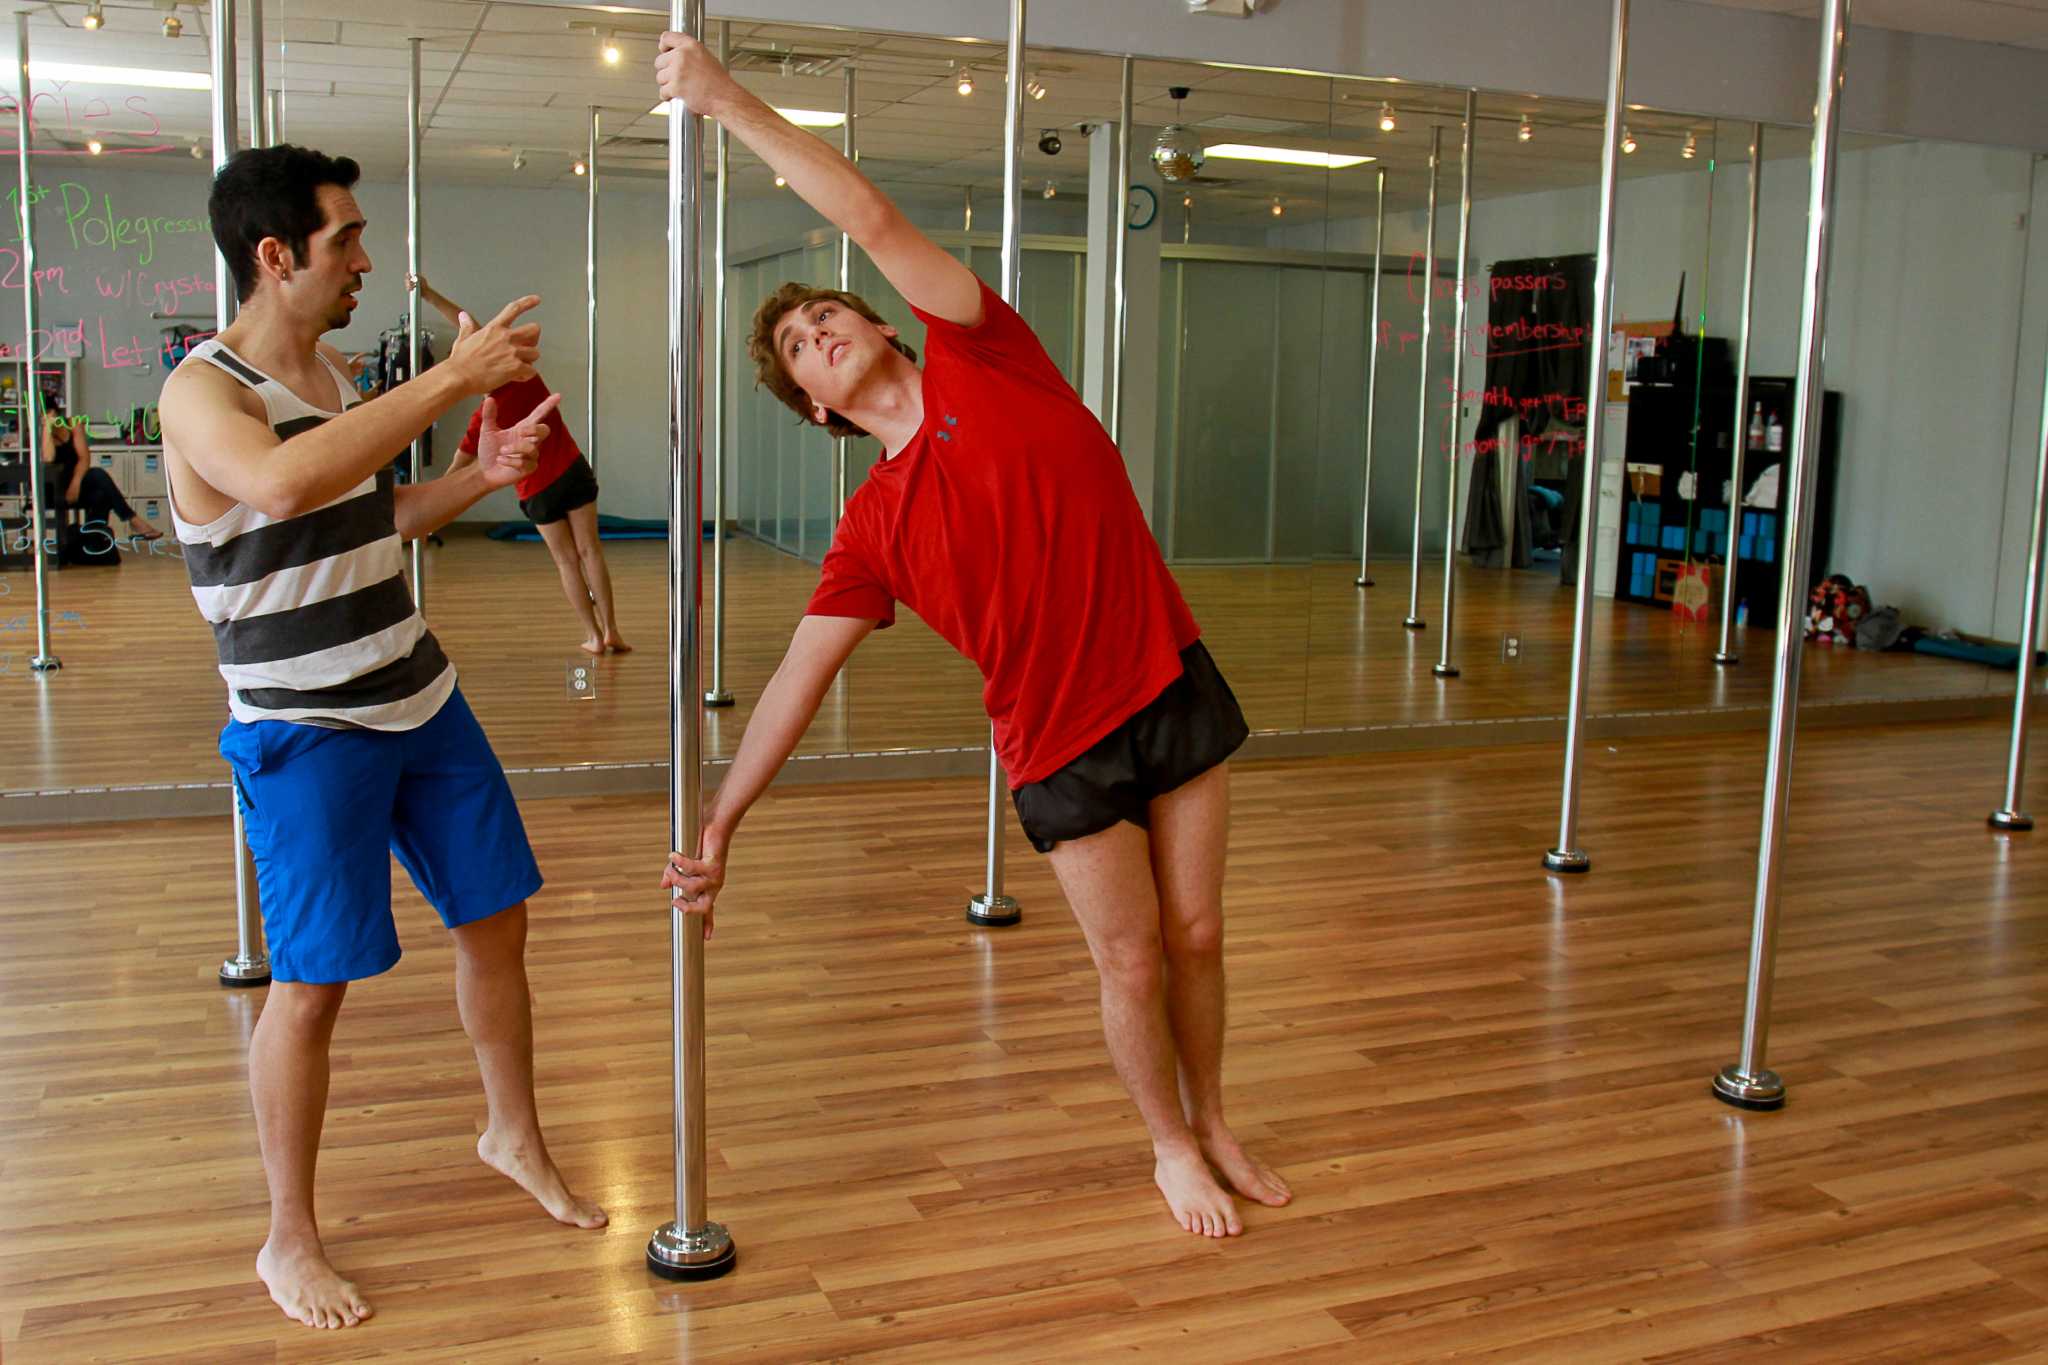 Men seeking workout challenge take pole-dancing class for a spin